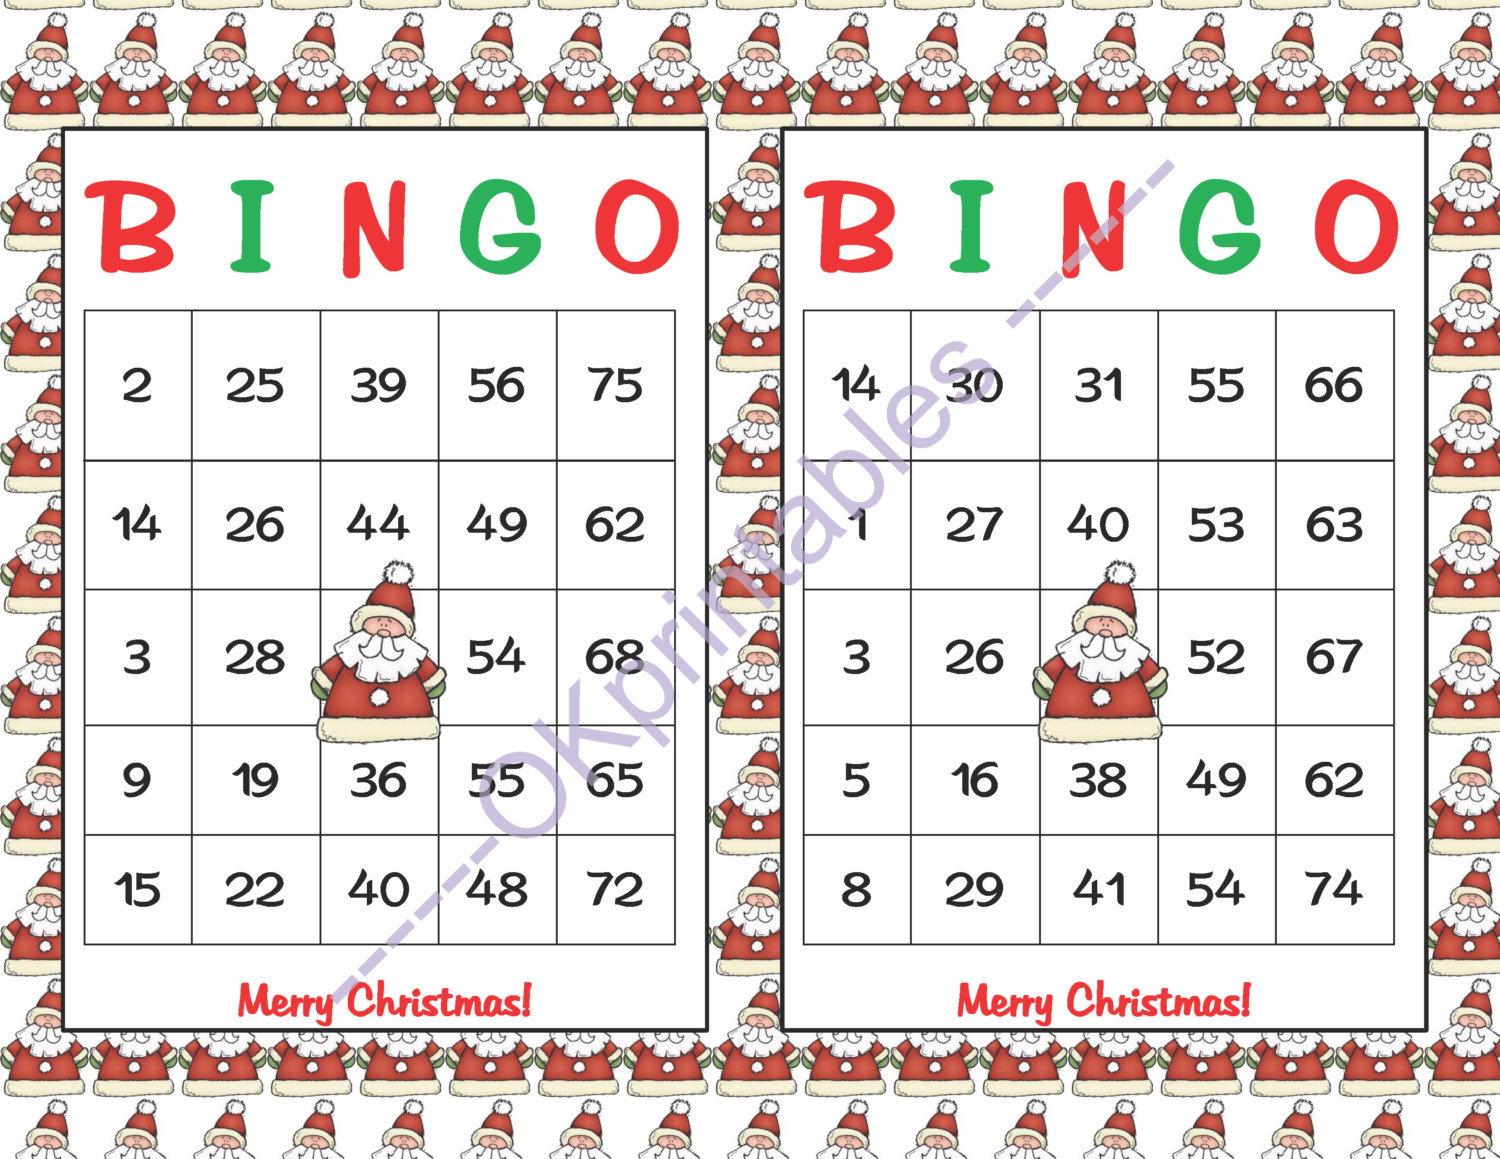 60 Merry Christmas Bingo Cards Instant By Okprintables On Zibbet